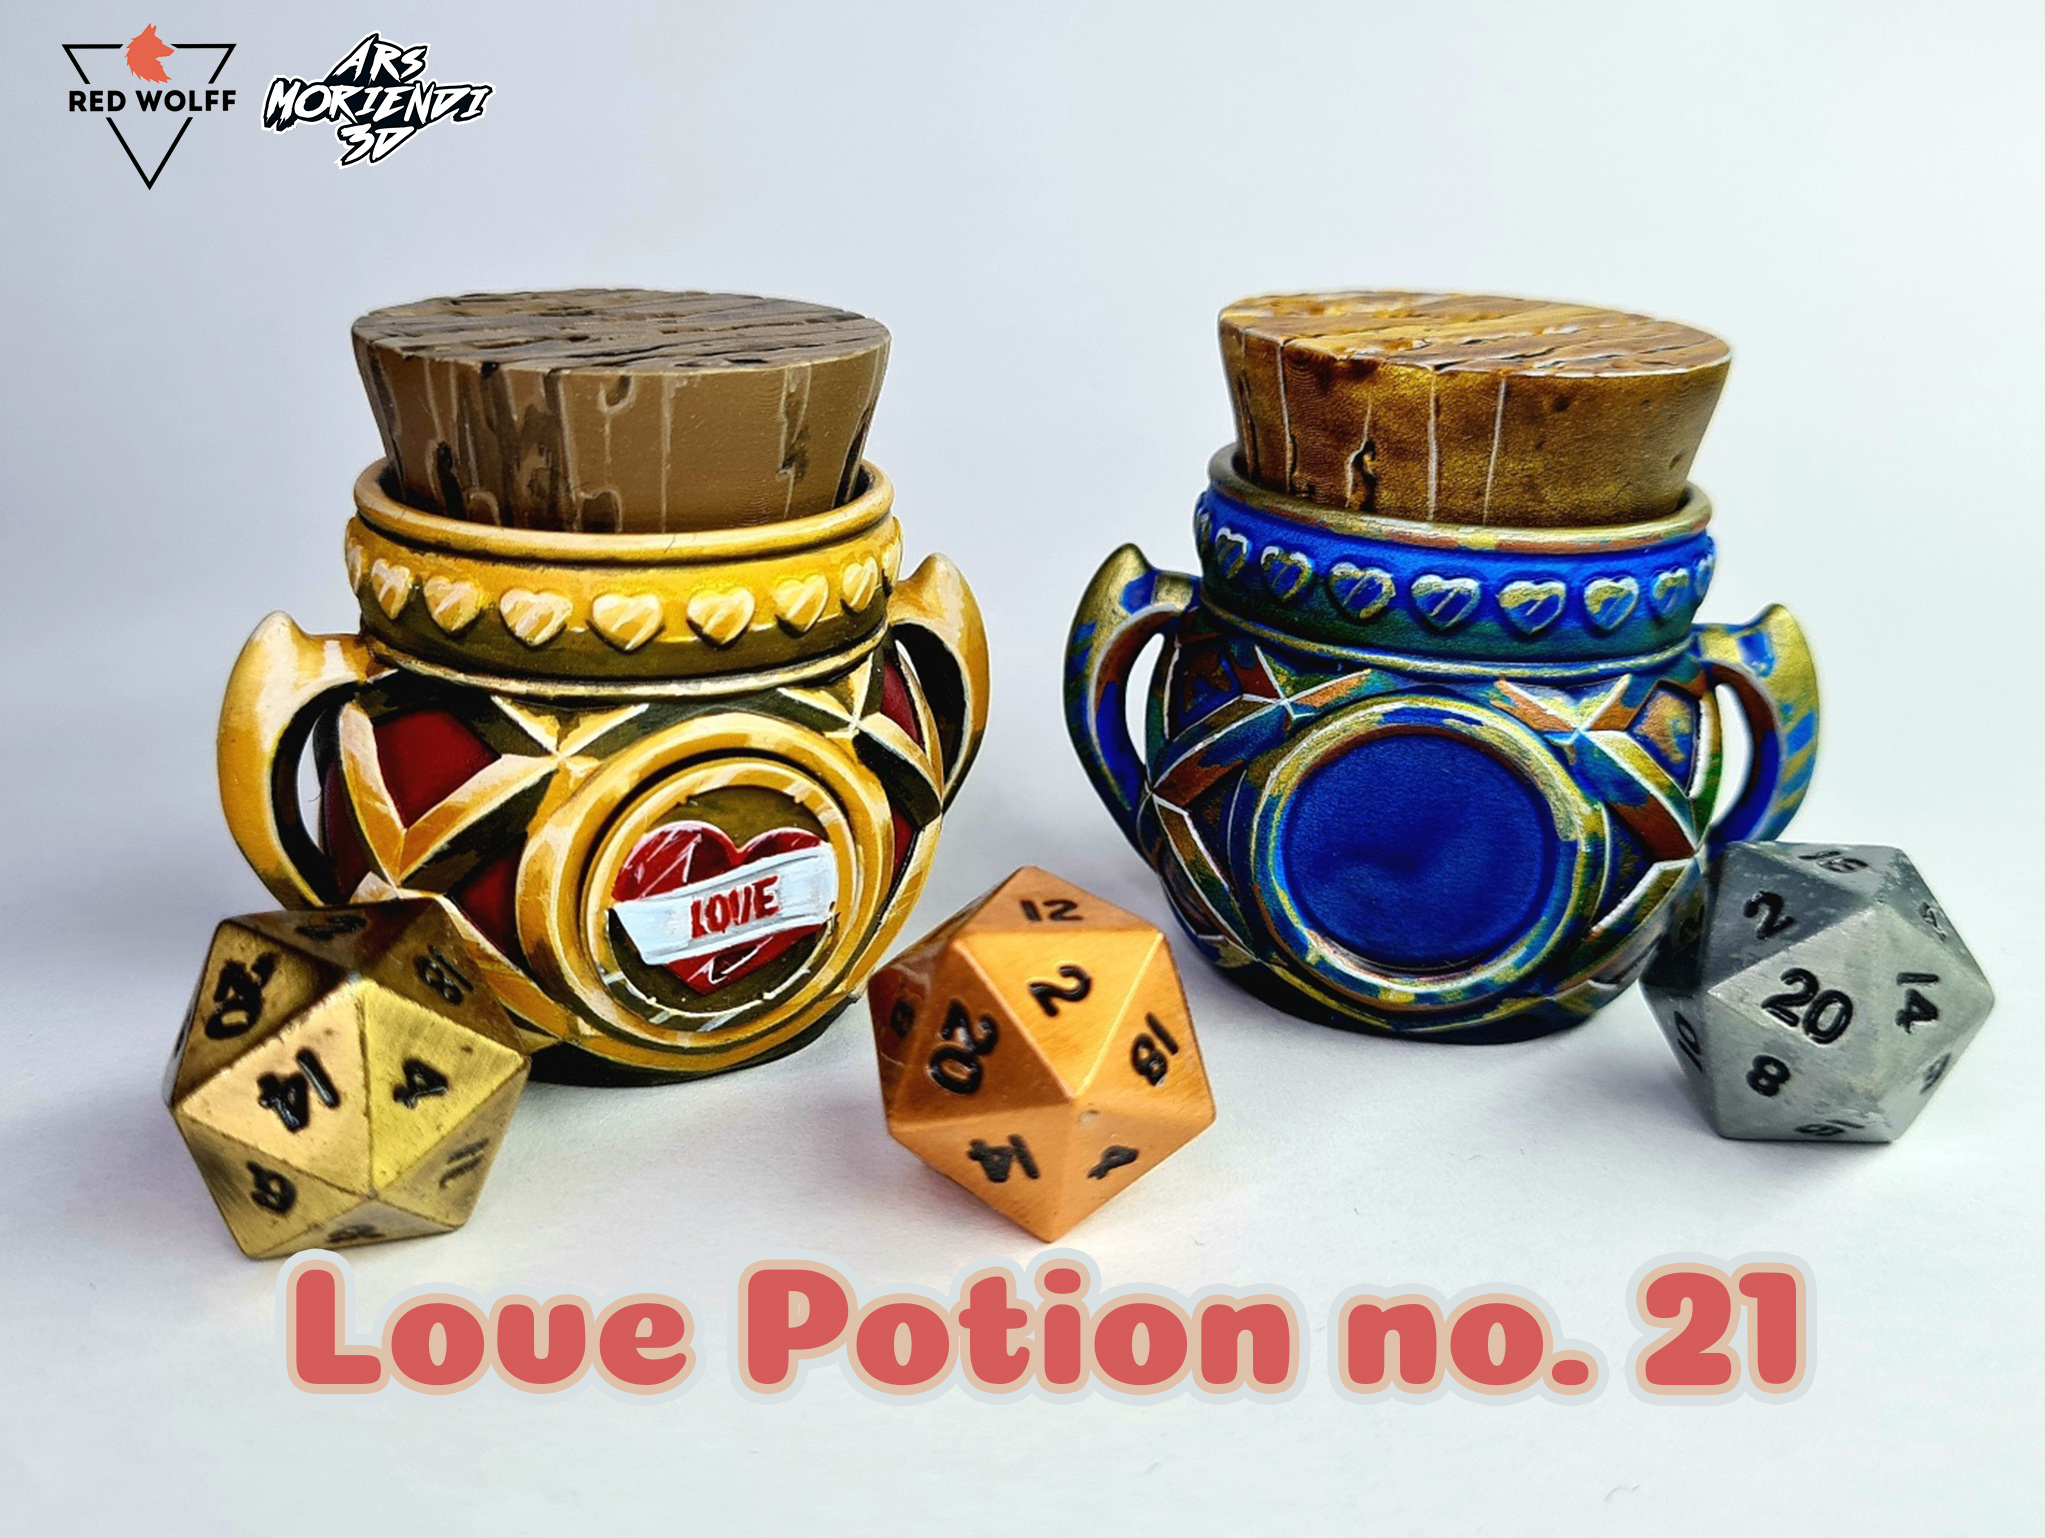 Love Potion no. 21 - Dice Bottle - Mythic Potions